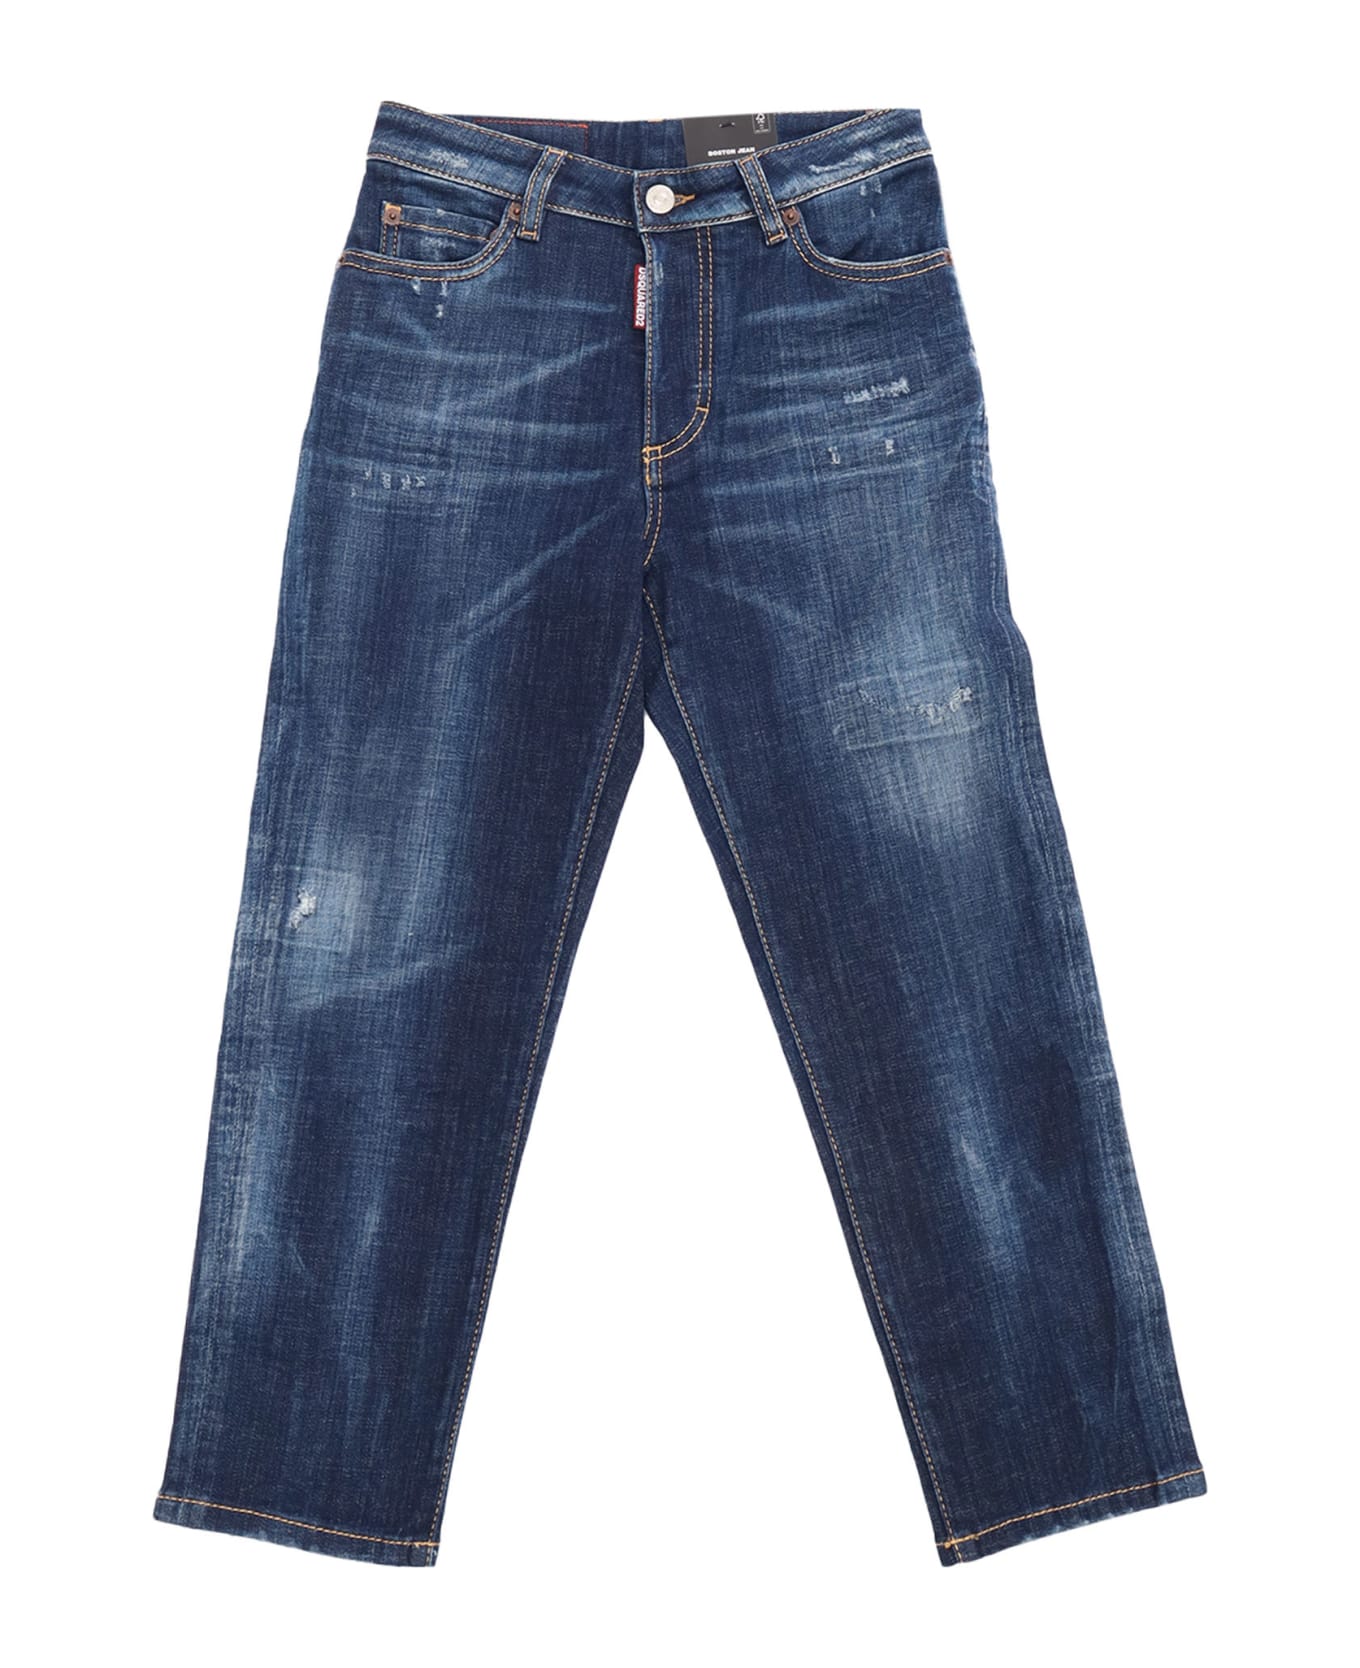 Dsquared2 Boston Jeans - BLUE ボトムス